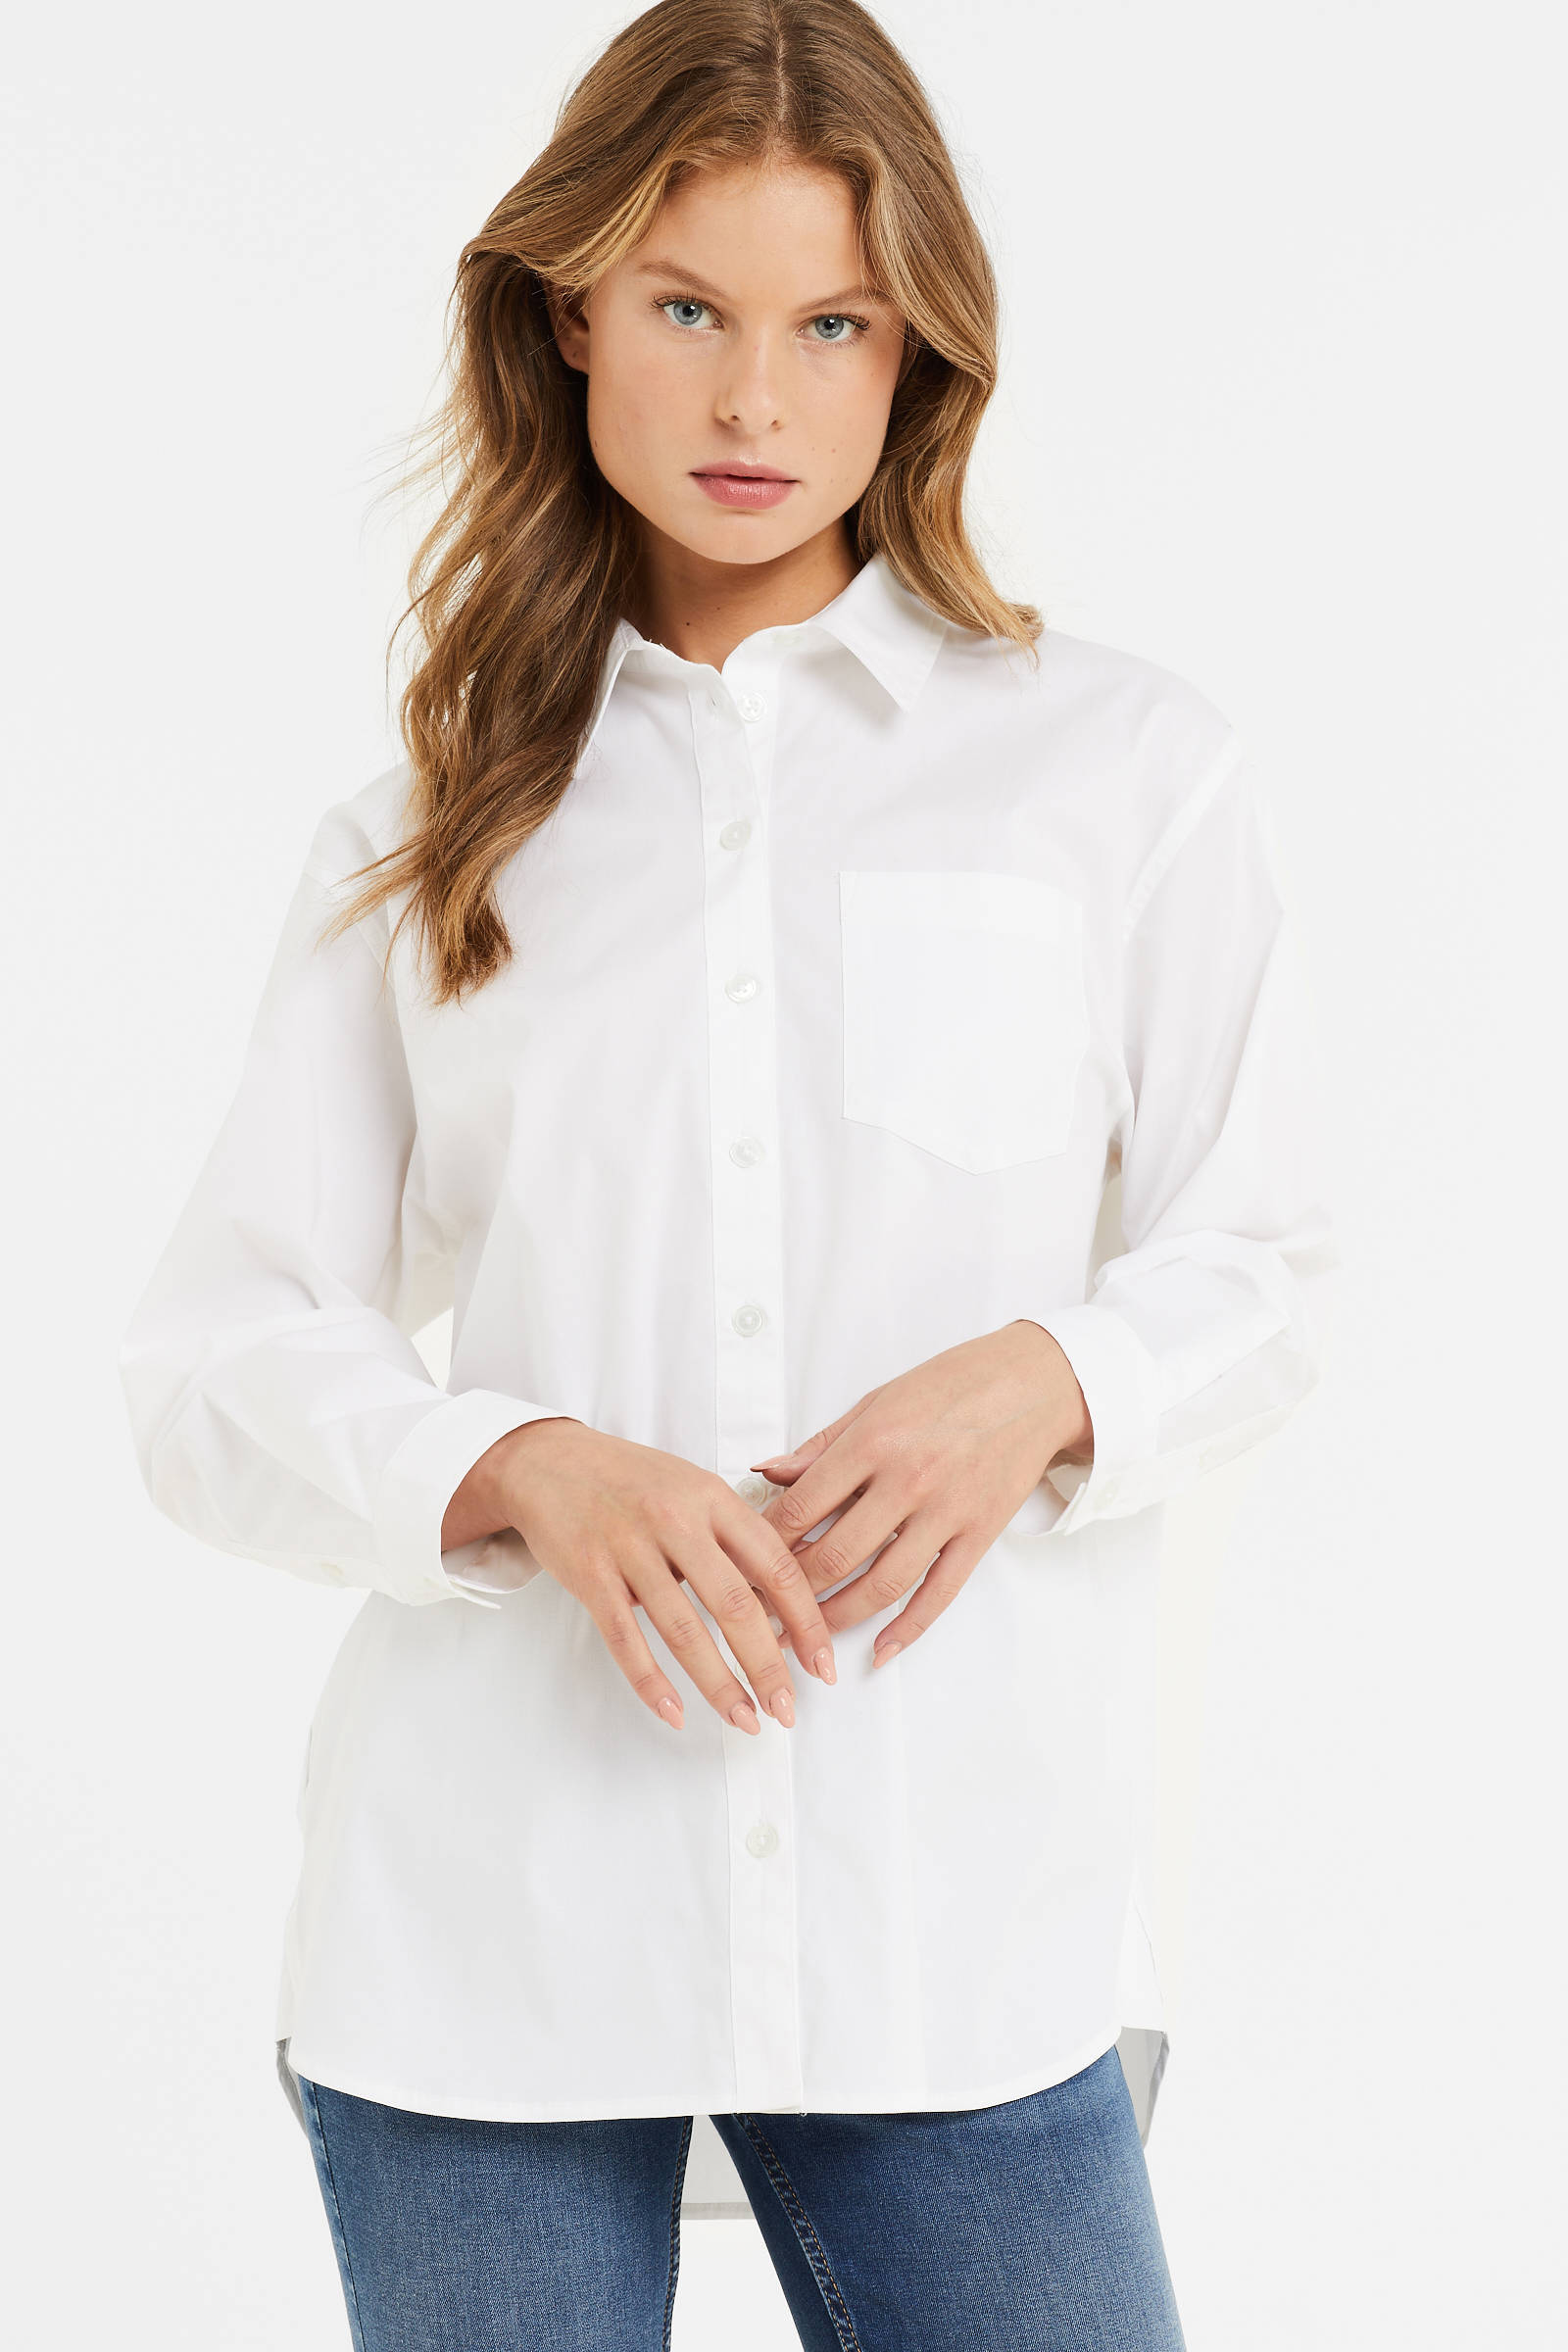 Zara Oversized blouse wit zakelijke stijl Mode Blouses Oversized blouses 